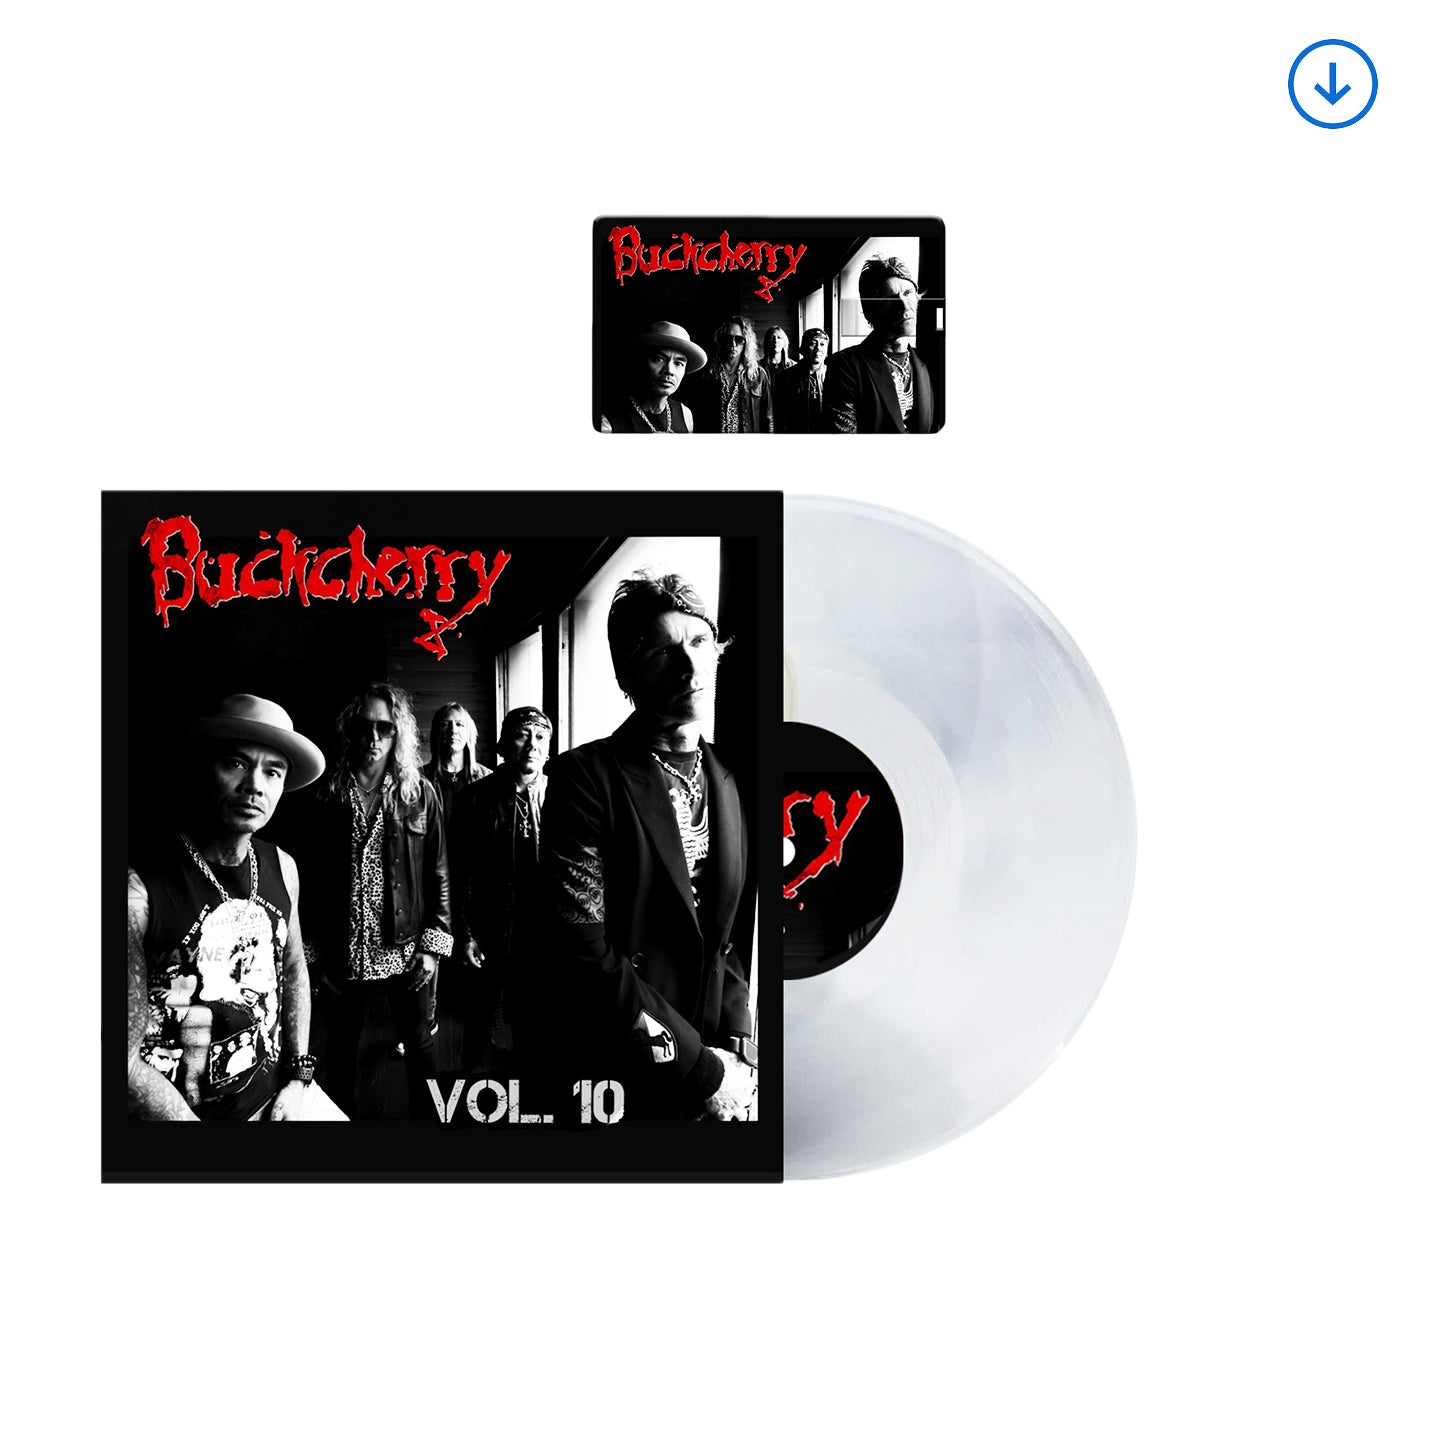 Buckcherry "Vol. 10" Clear Vinyl, Credit Card Shaped USB